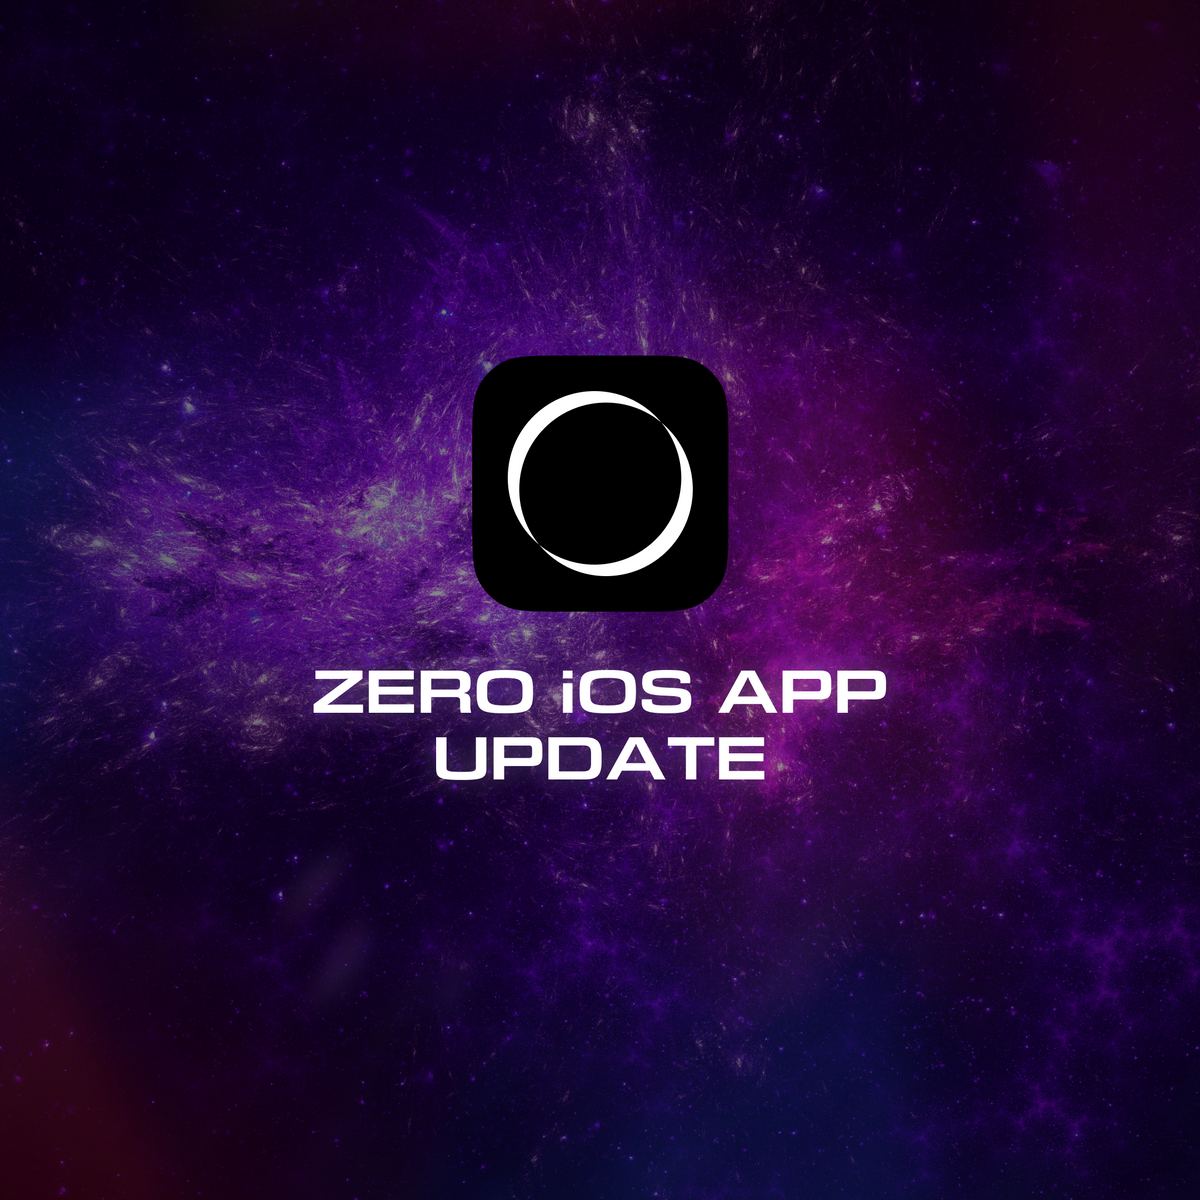 Update: New version of the ZERO iOS App